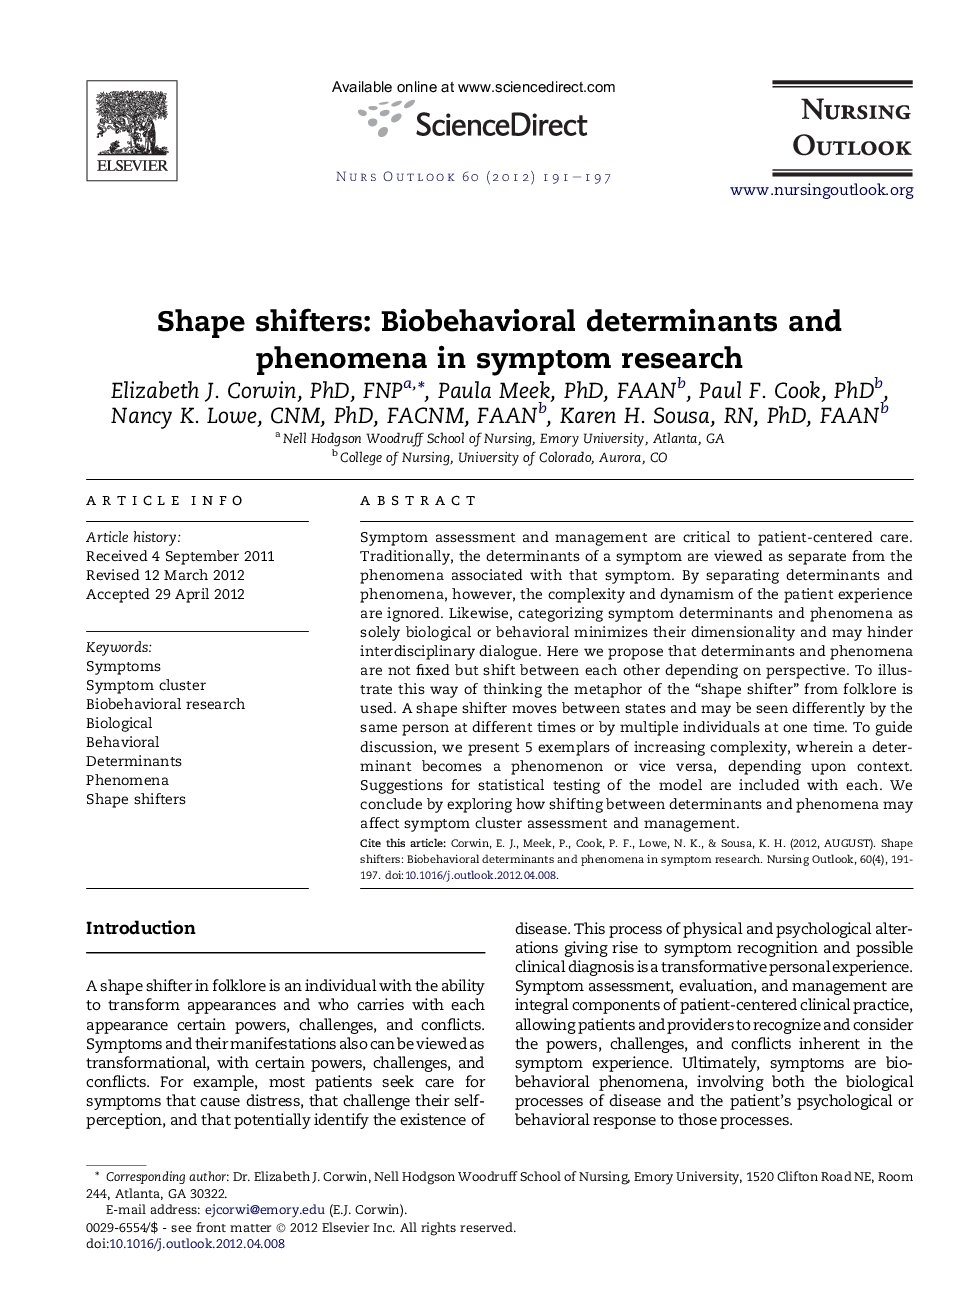 Shape shifters: Biobehavioral determinants and phenomena in symptom research